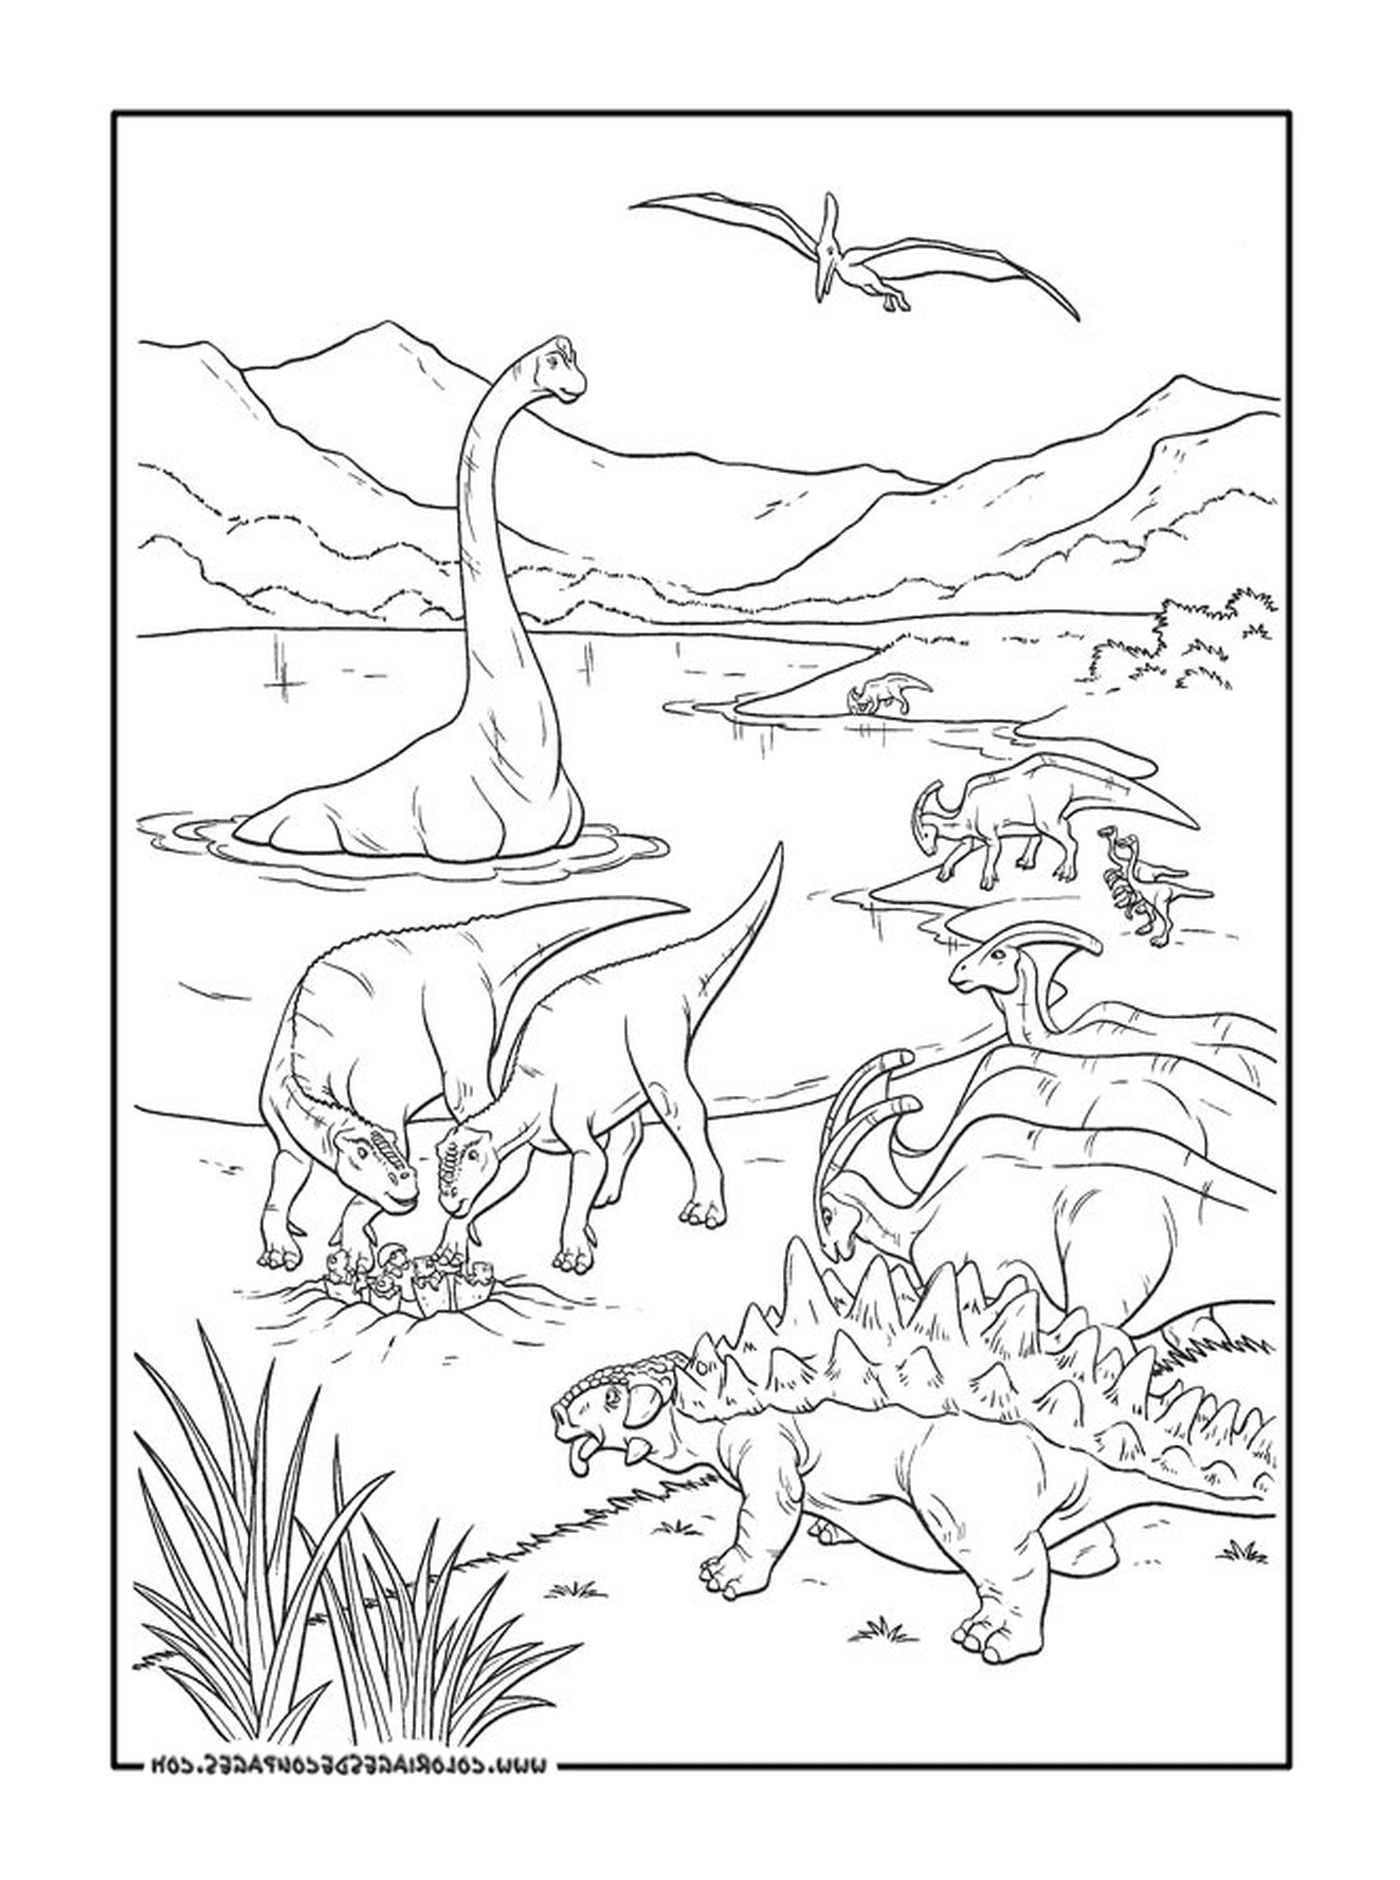  An adult from a dinosaur group 